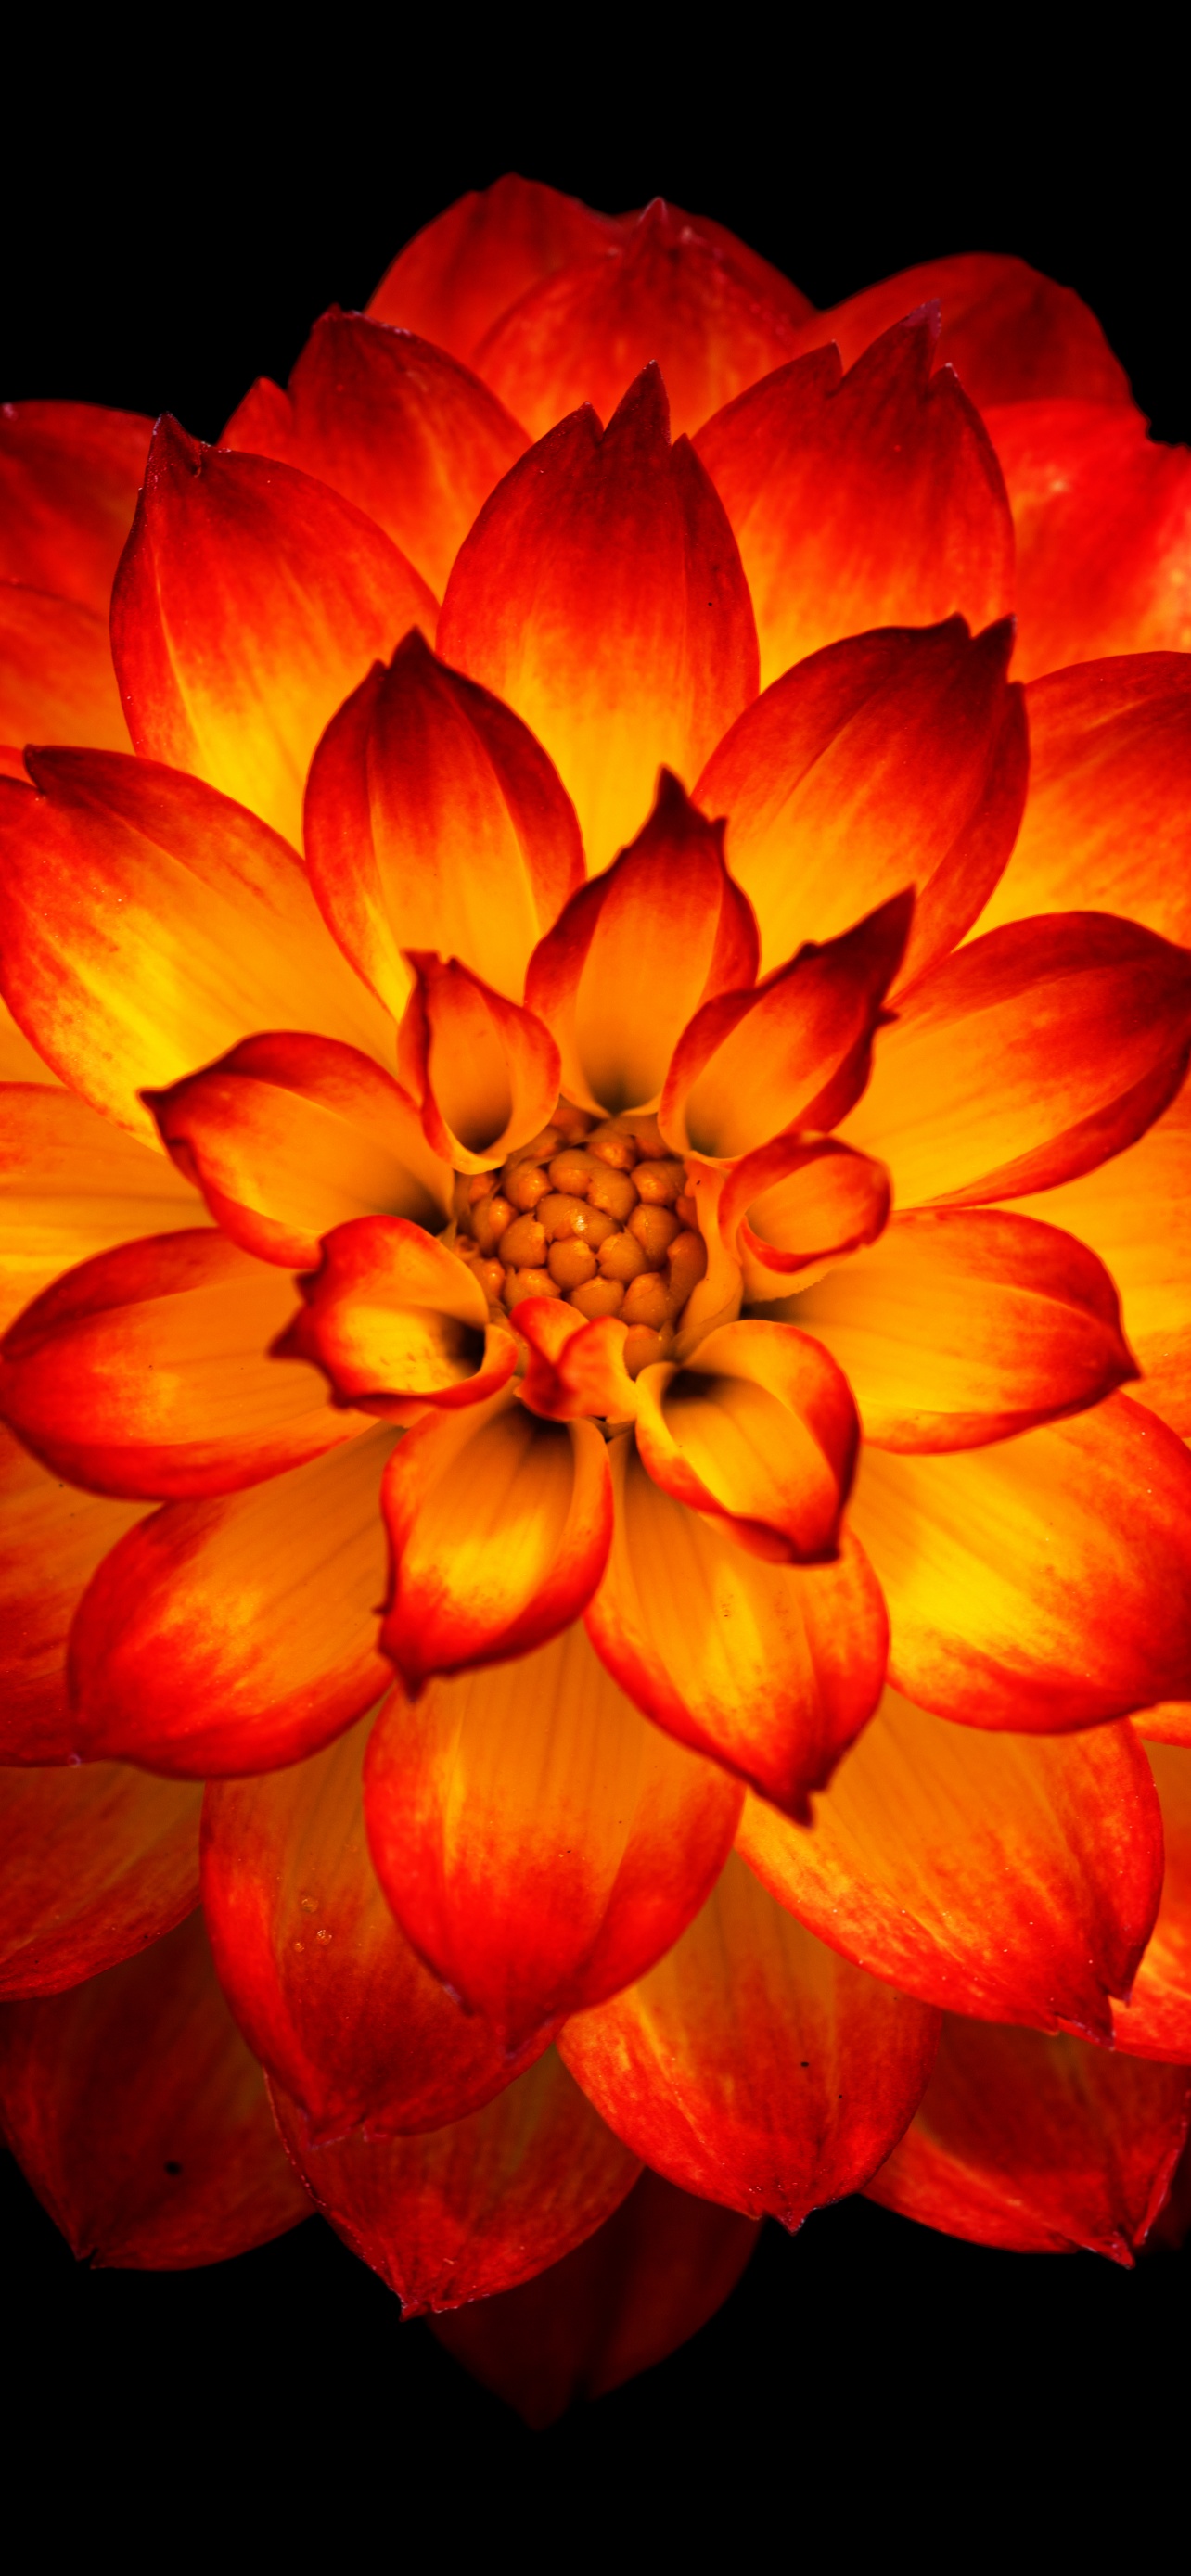 orange lotus flower